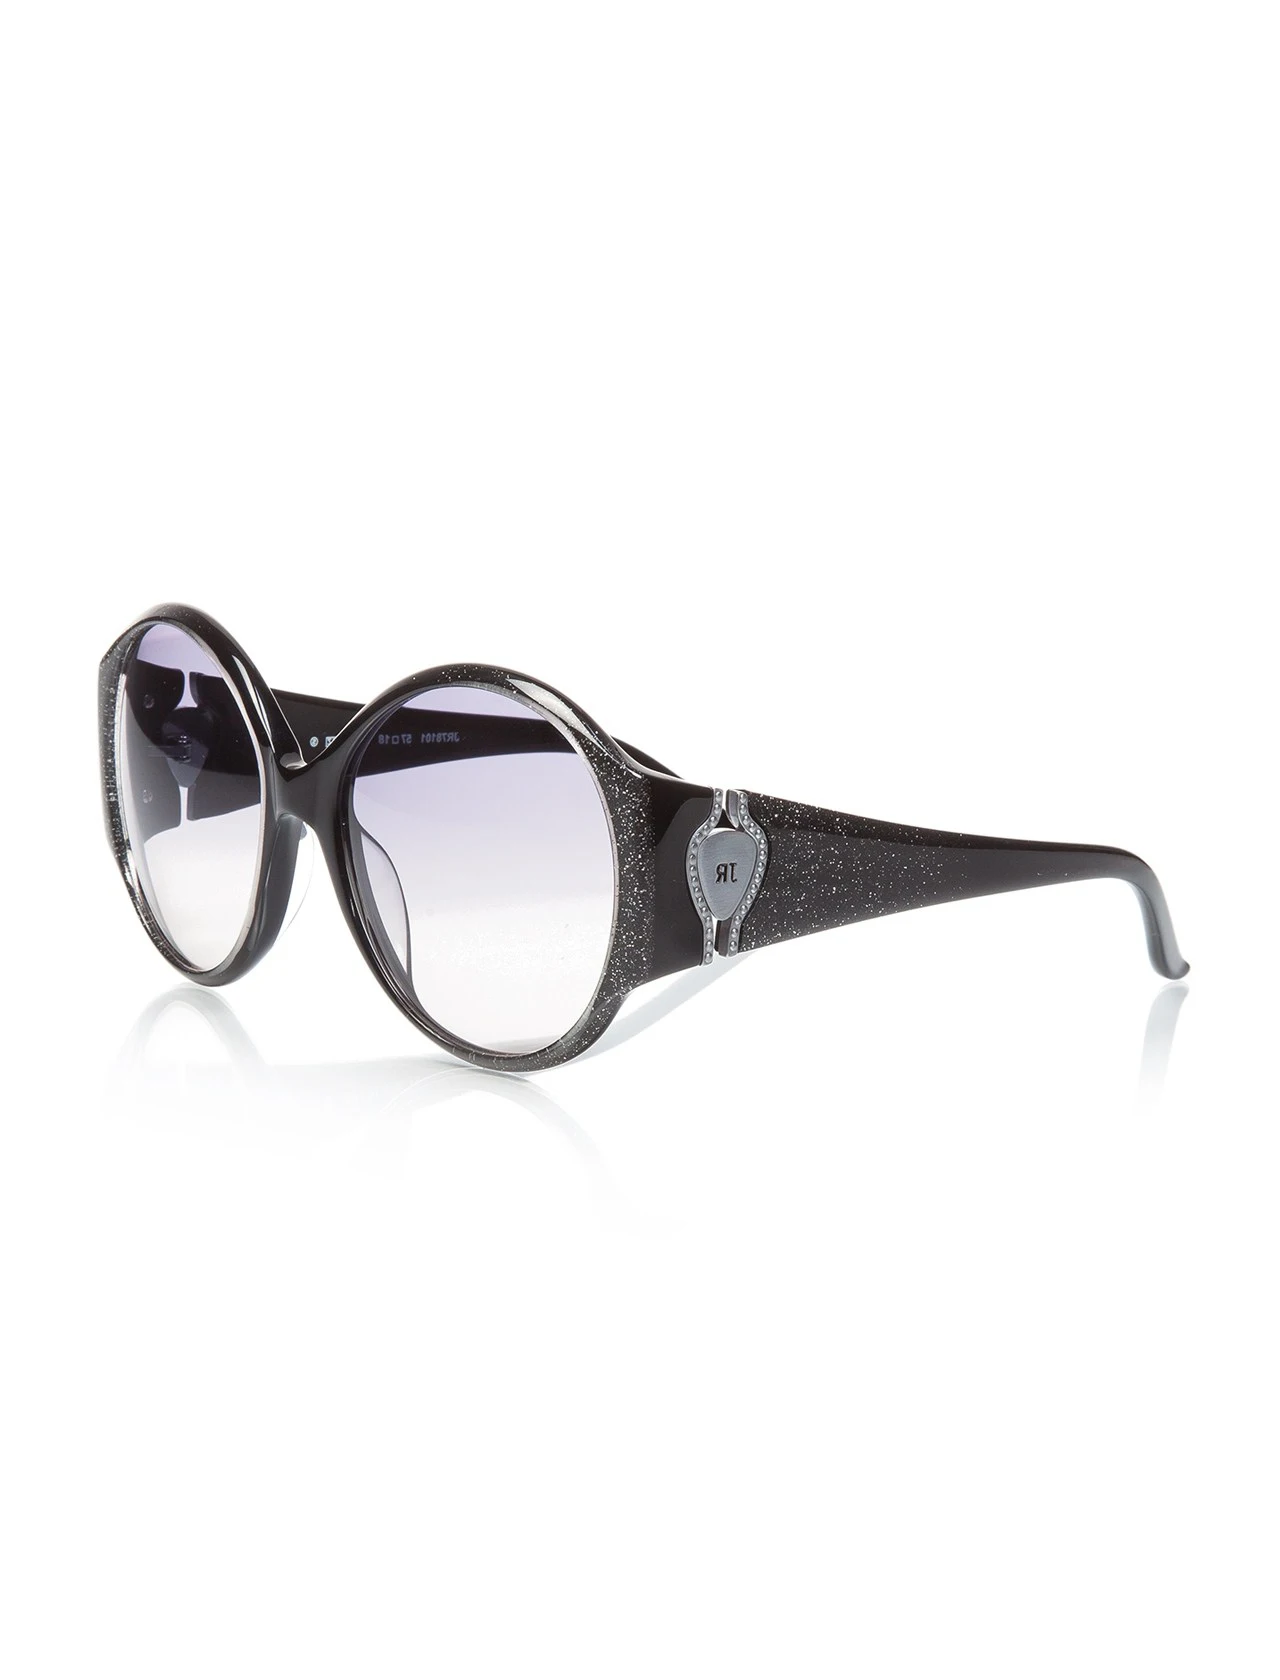 

Women's sunglasses jr 781 01 57 bone black organic round round 57-18-135 john richmond